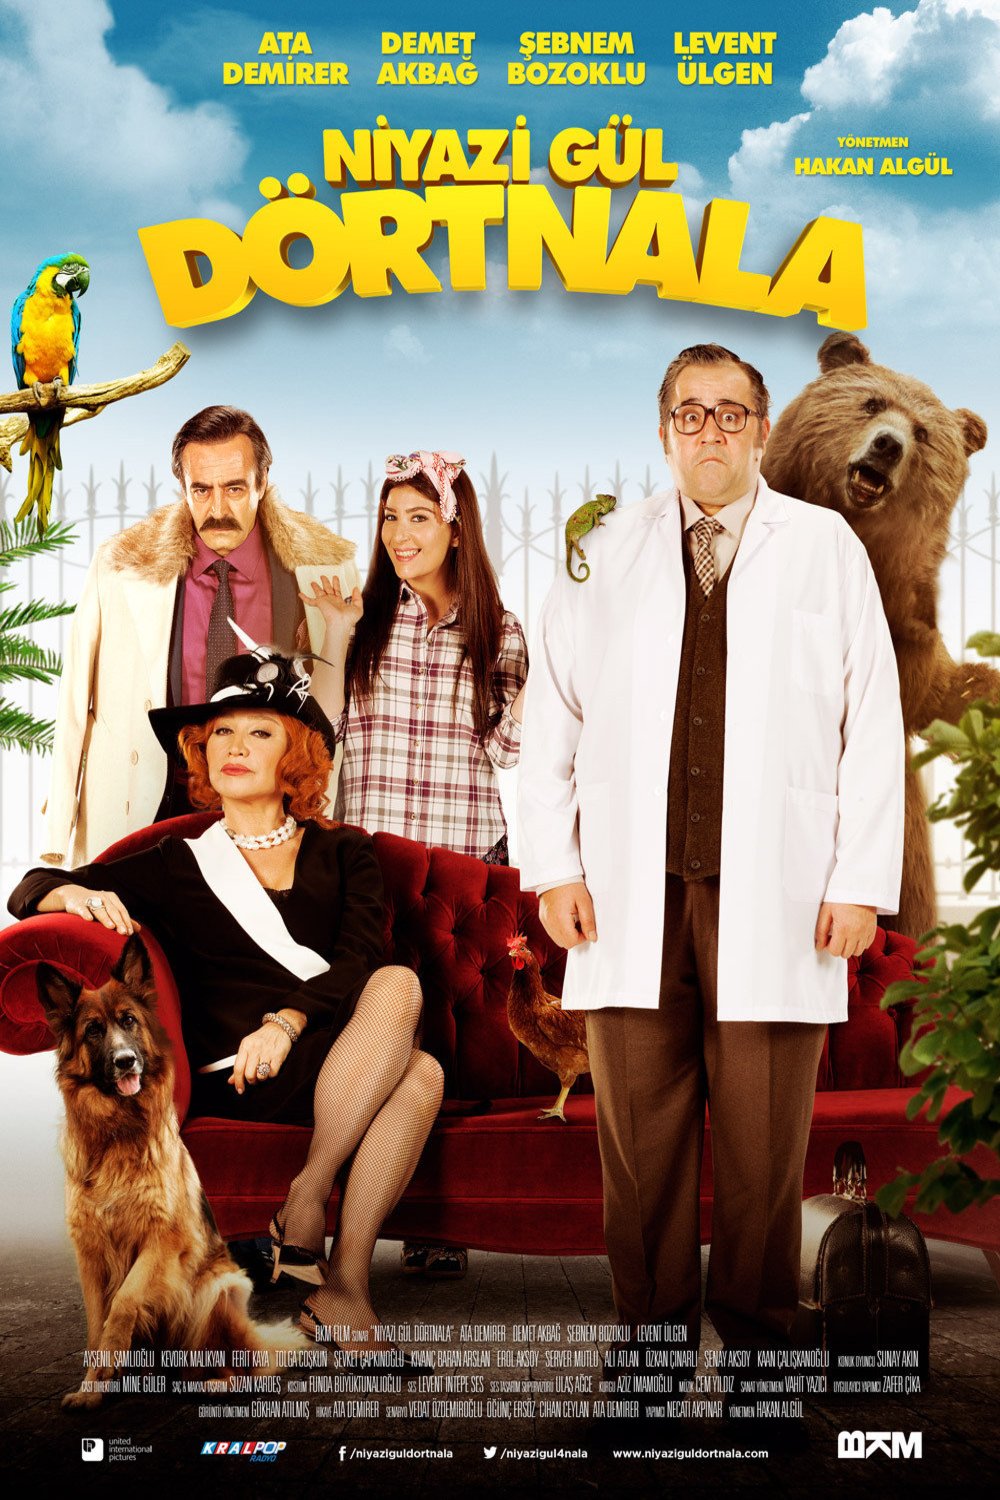 L'affiche originale du film Niyazi Gül Dörtnala en turc